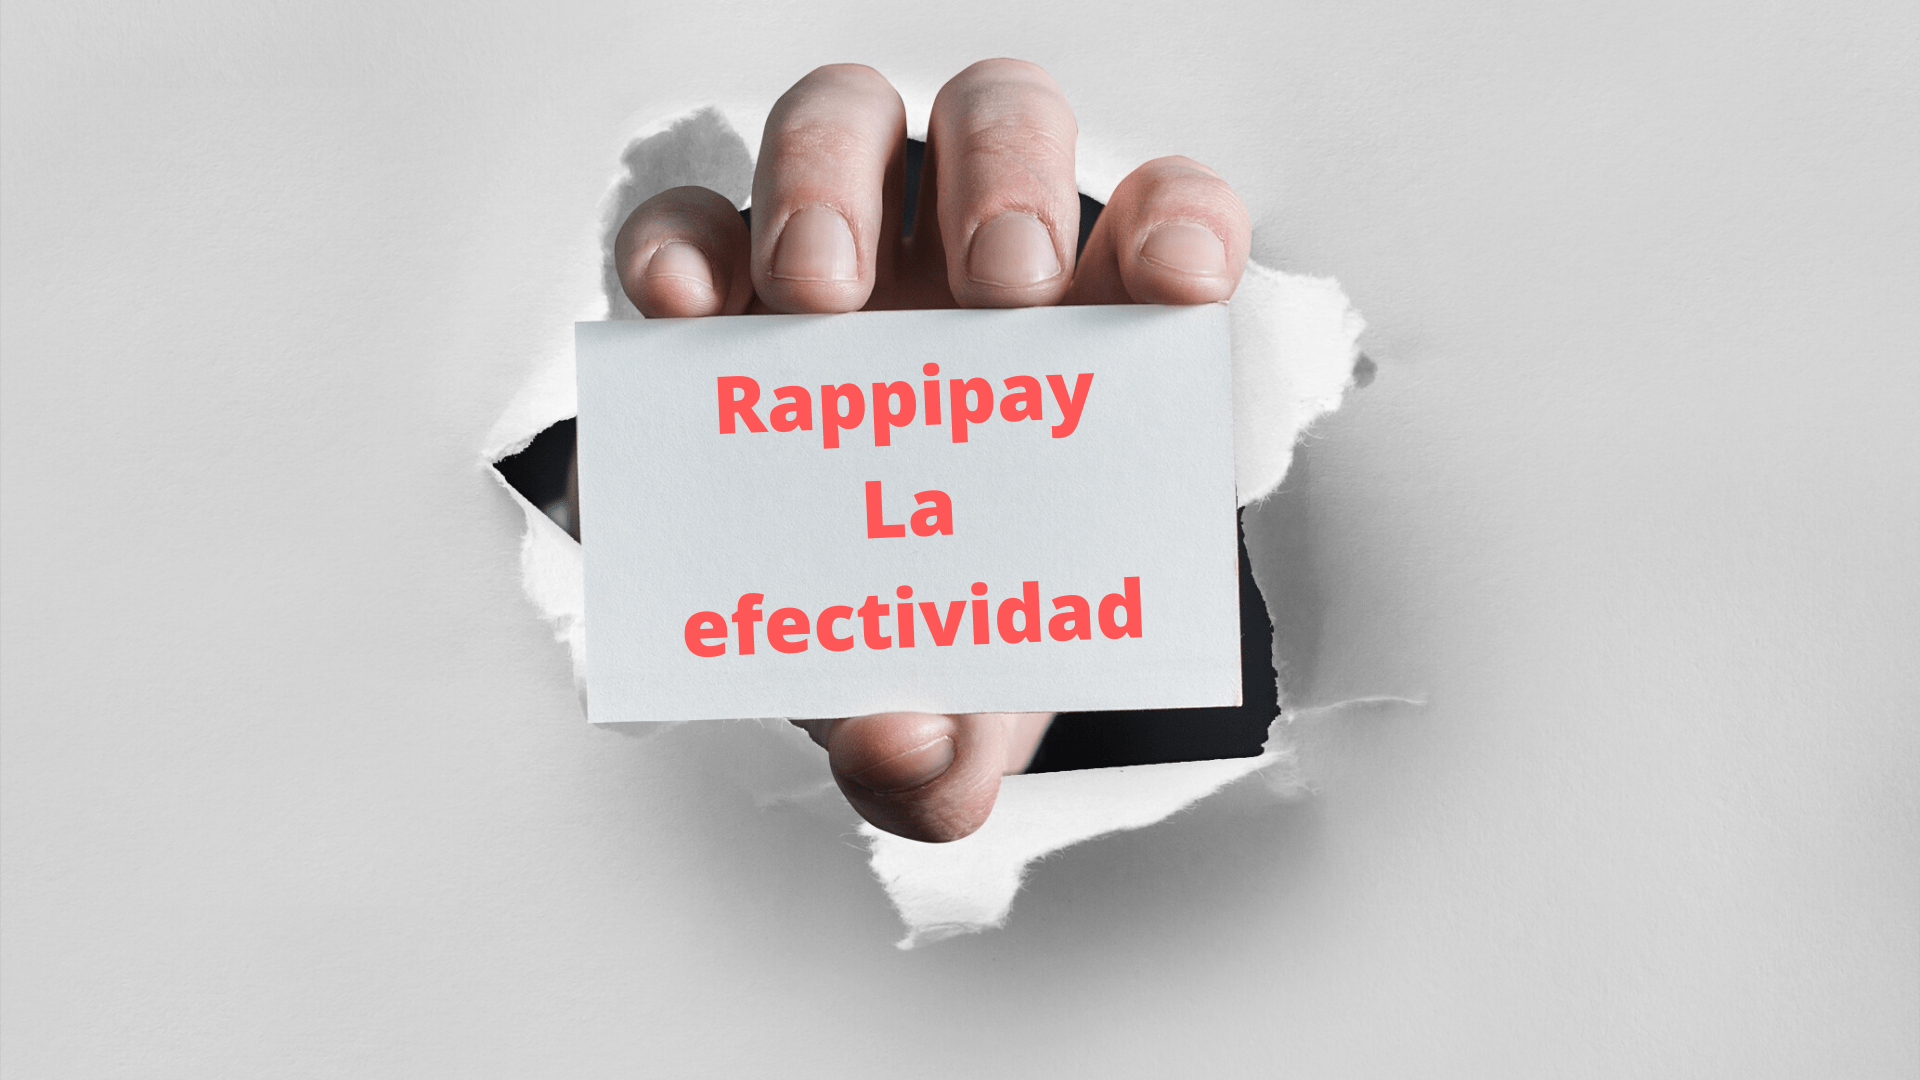 Rappipay